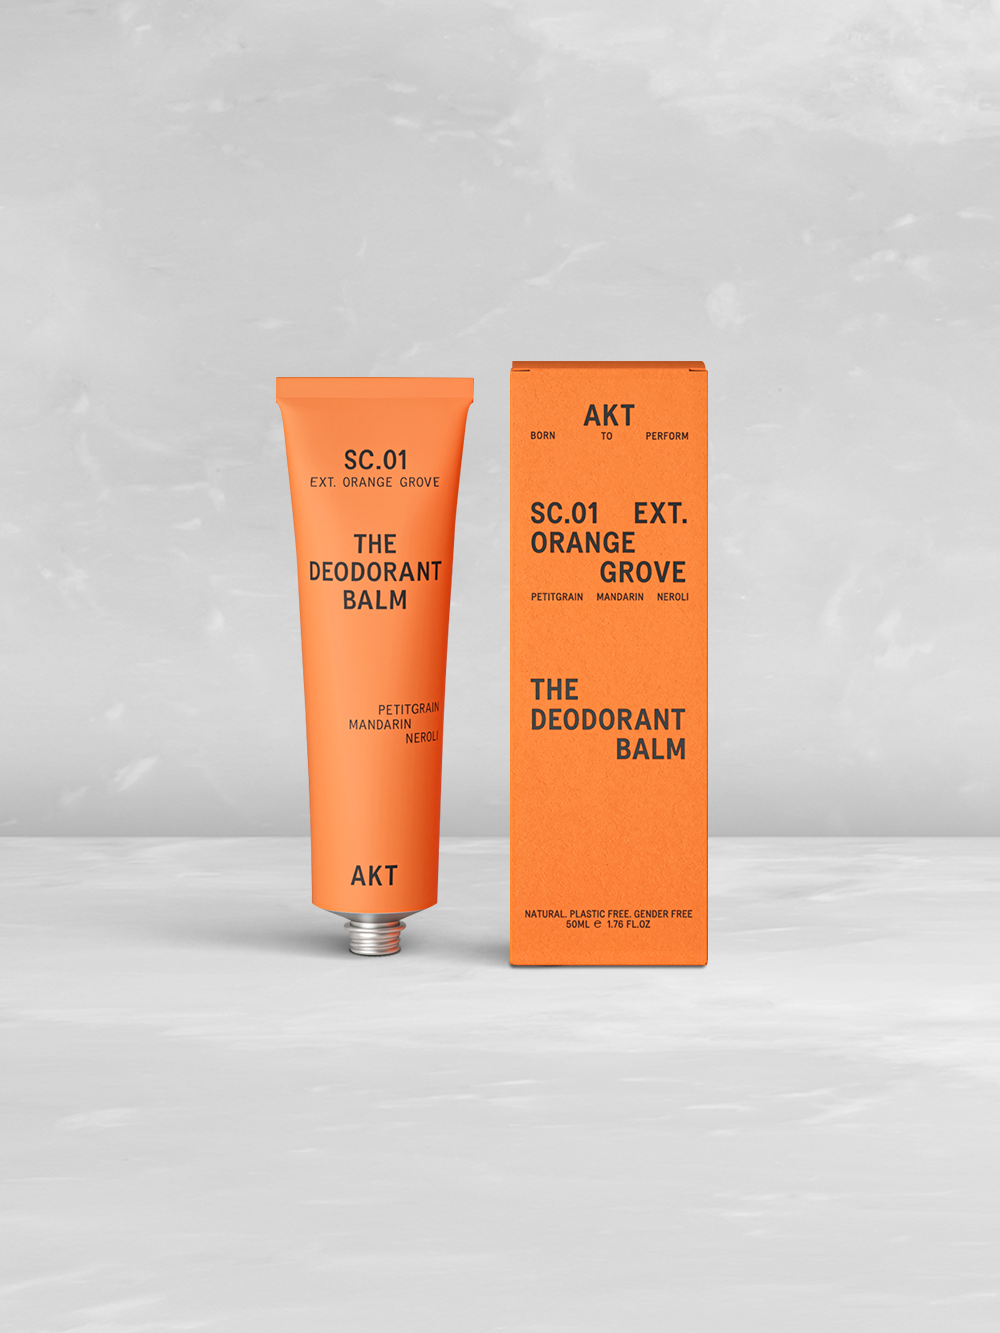 the natural deodorant balm SC.01